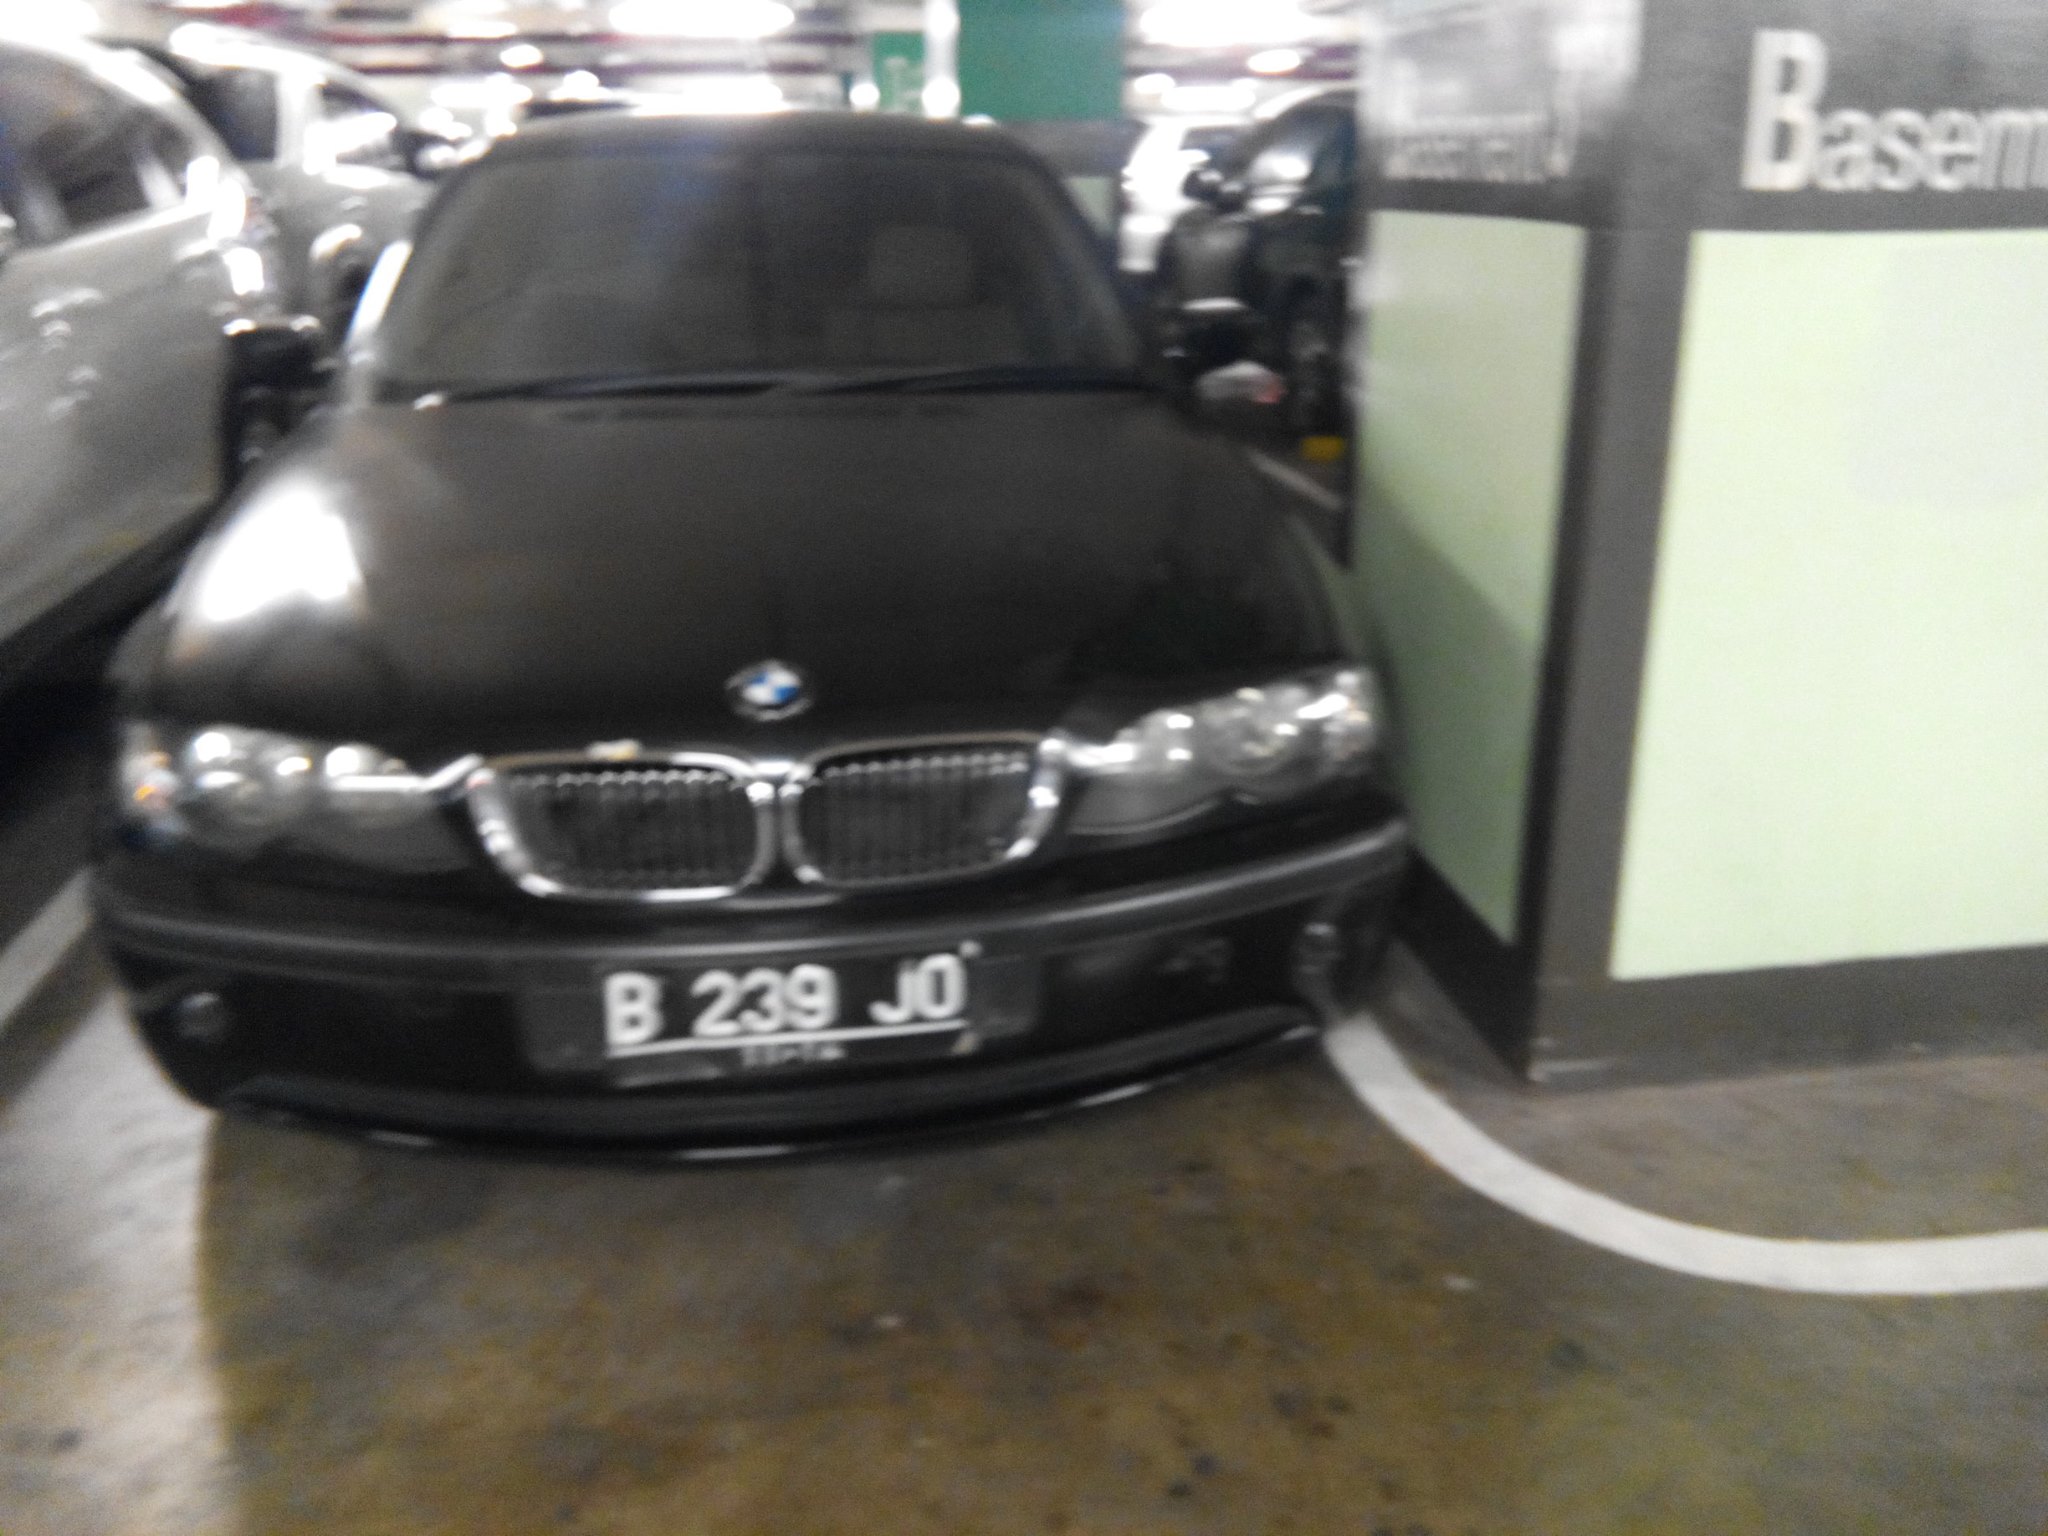 Wahai Pemilik Mobil BMW B 239 JO Kalau Parkir Jangan Nabrak Mobil